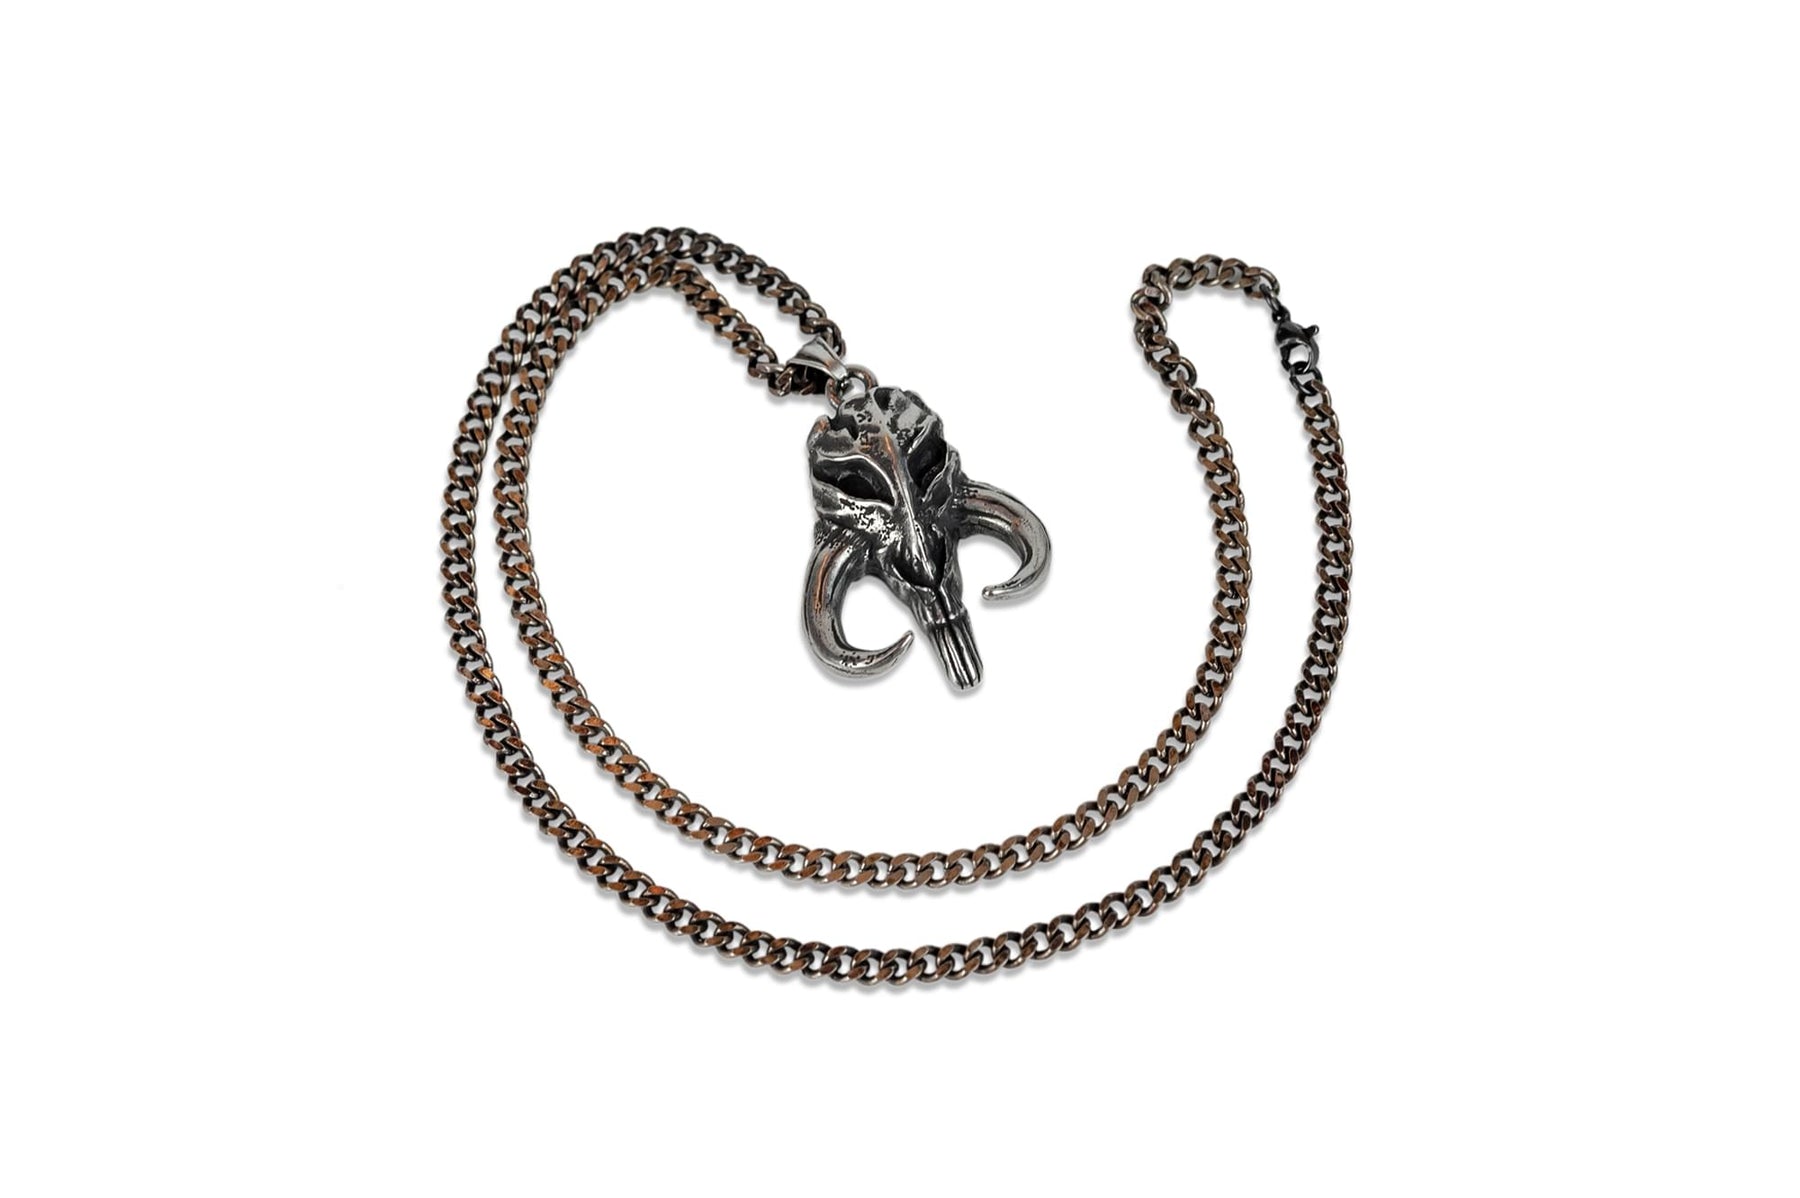 Star Wars Mandalorian Mythosaur Skull Pendant Necklace | 22-Inch Long Chain